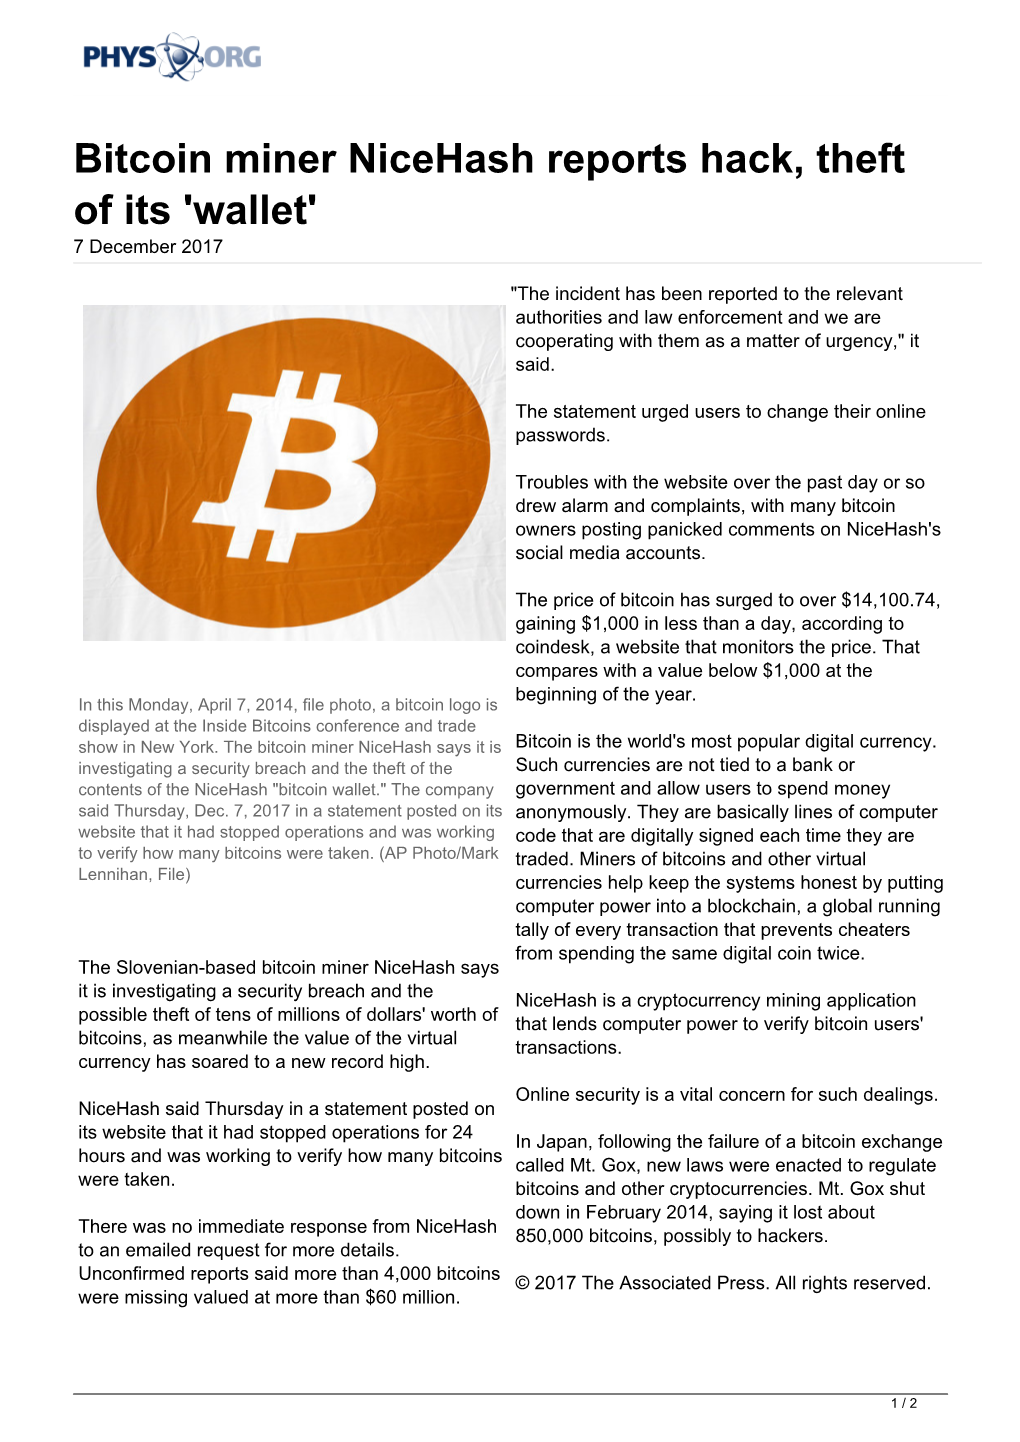 Bitcoin Miner Nicehash Reports Hack, Theft of Its 'Wallet' 7 December 2017